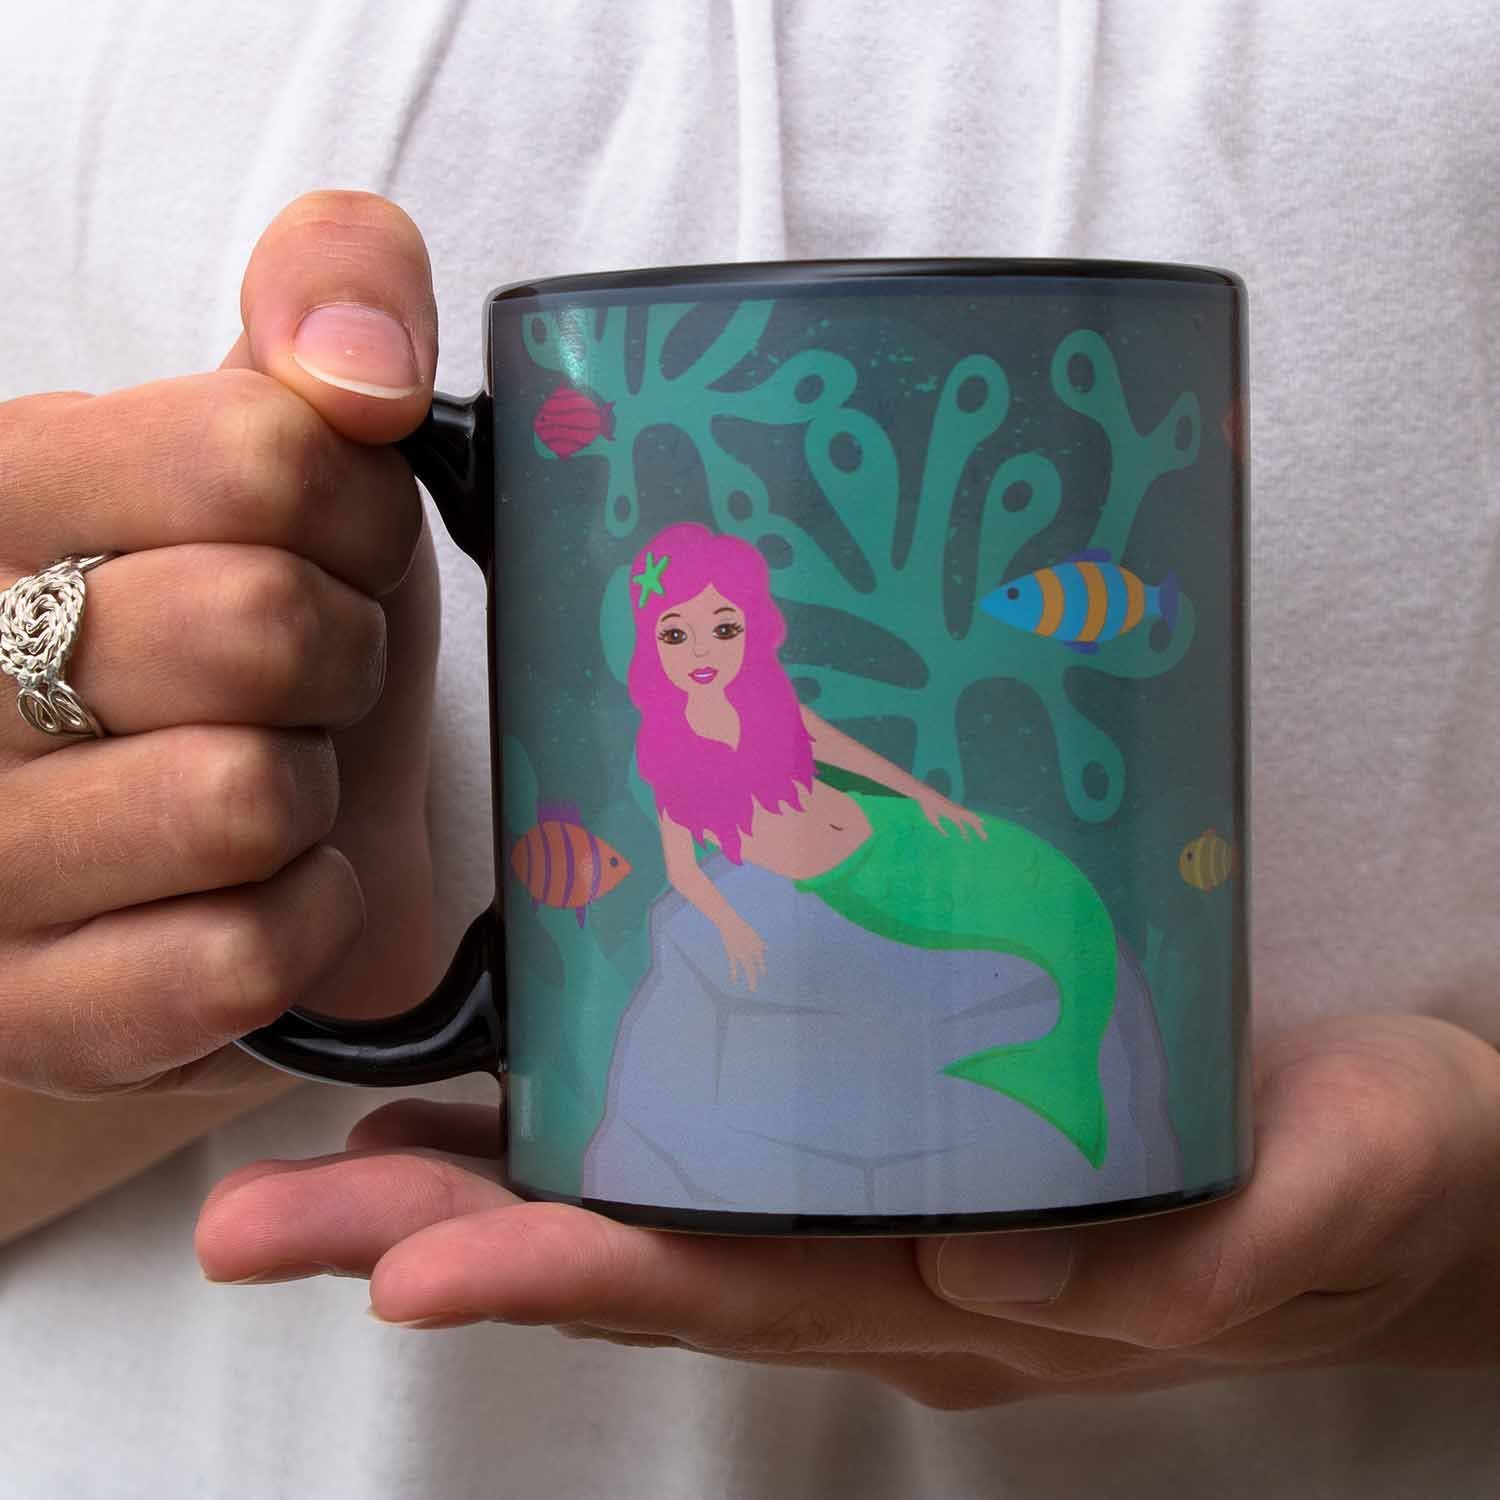 Thumbs Up Tasse - Mug) Heat (Mermaid Change "Meerjungfrau" Farbwechsel, Farbwechseleffekt mit Keramik